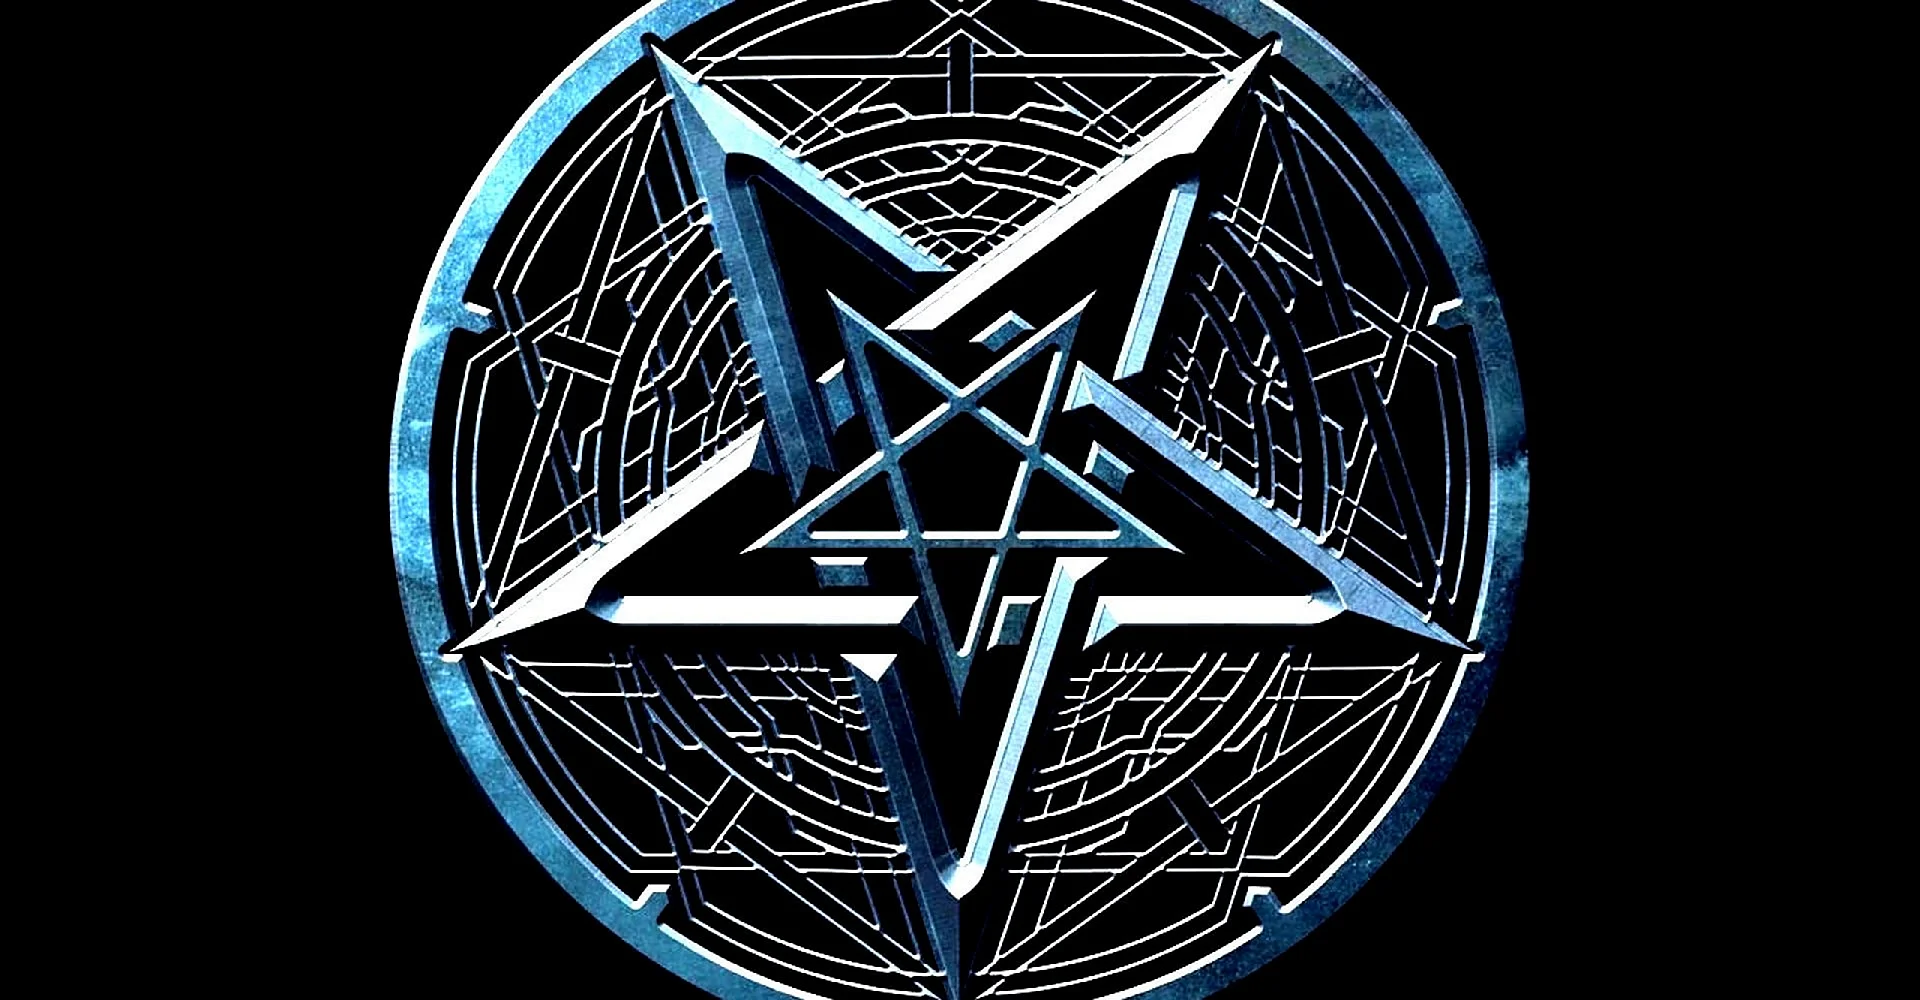 Dimmu Borgir Logo Wallpaper